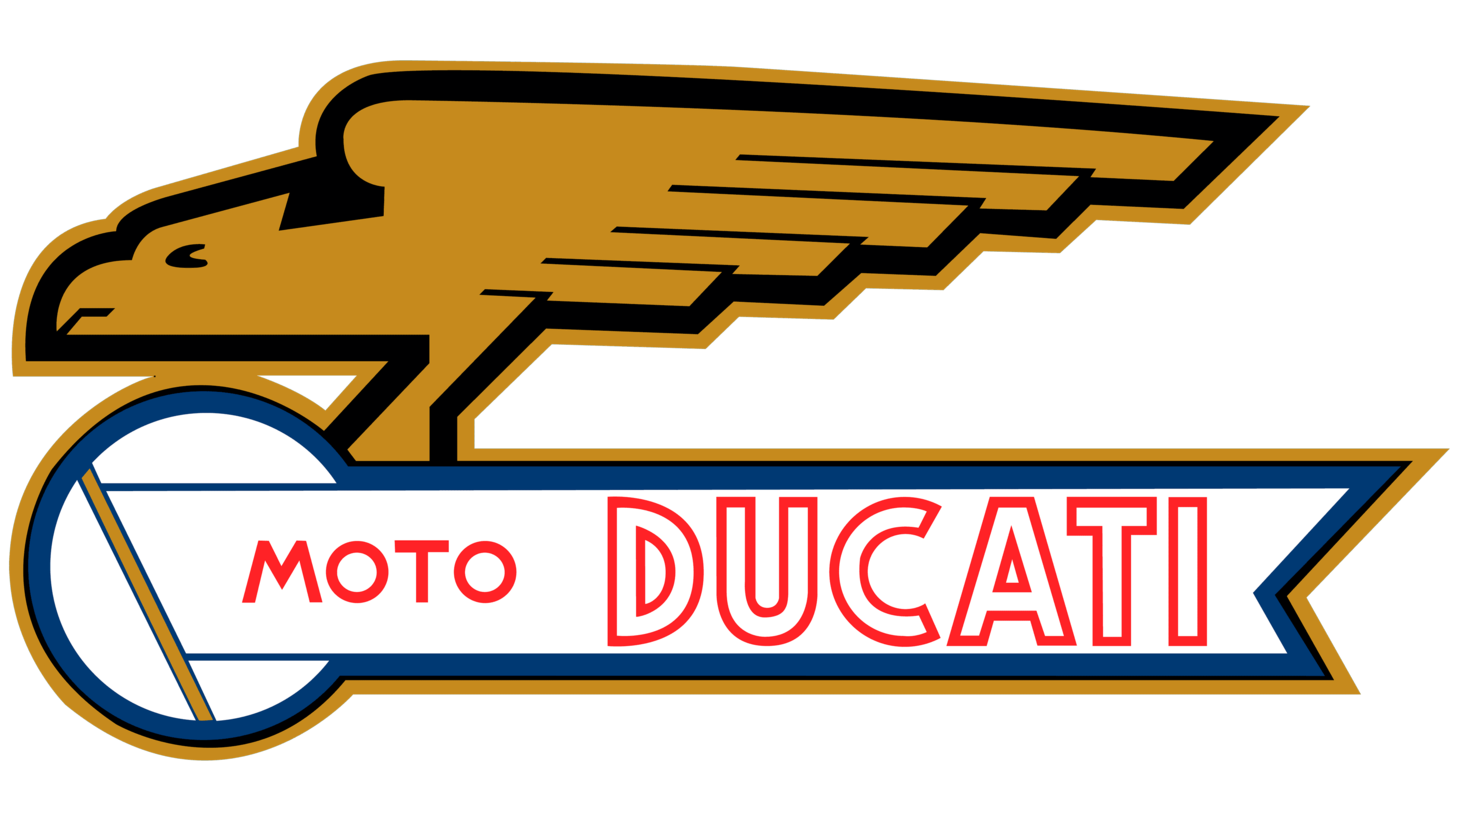 Ducati sign 1959 1967